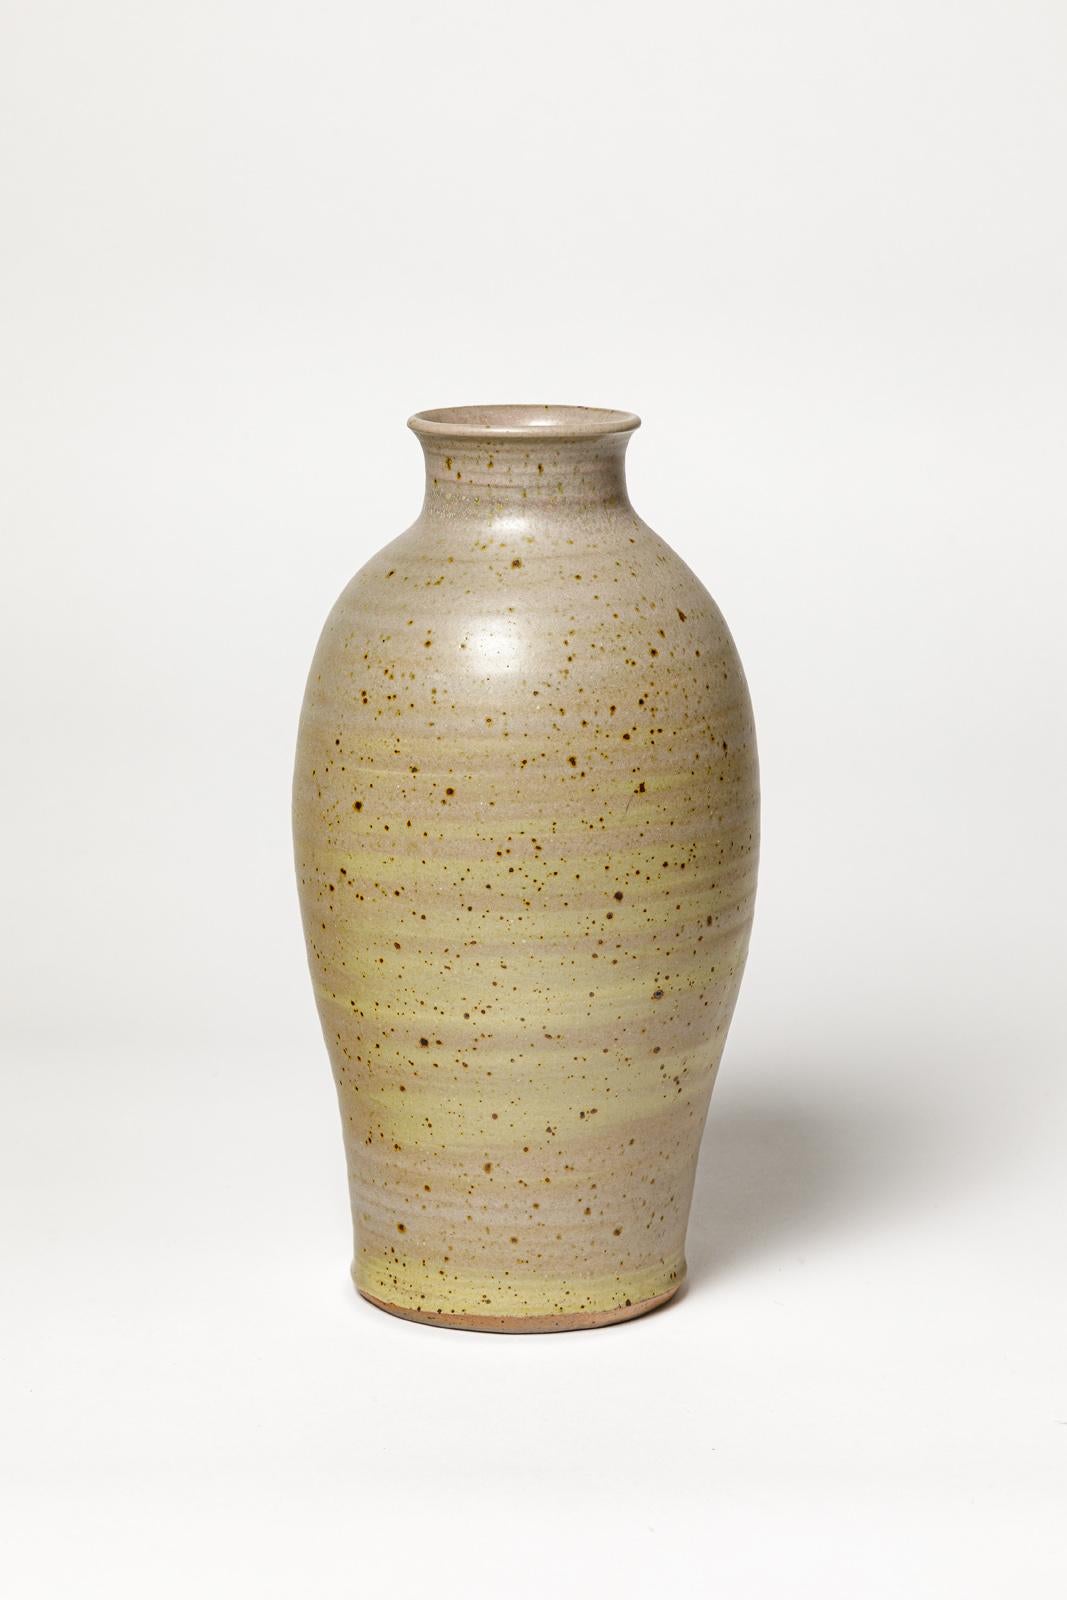 Denis Goudenhooft

Large 20th century design stoneware ceramic vase 

Original perfect condition

Signed under the base

Height 30 cm
Large 14 cm